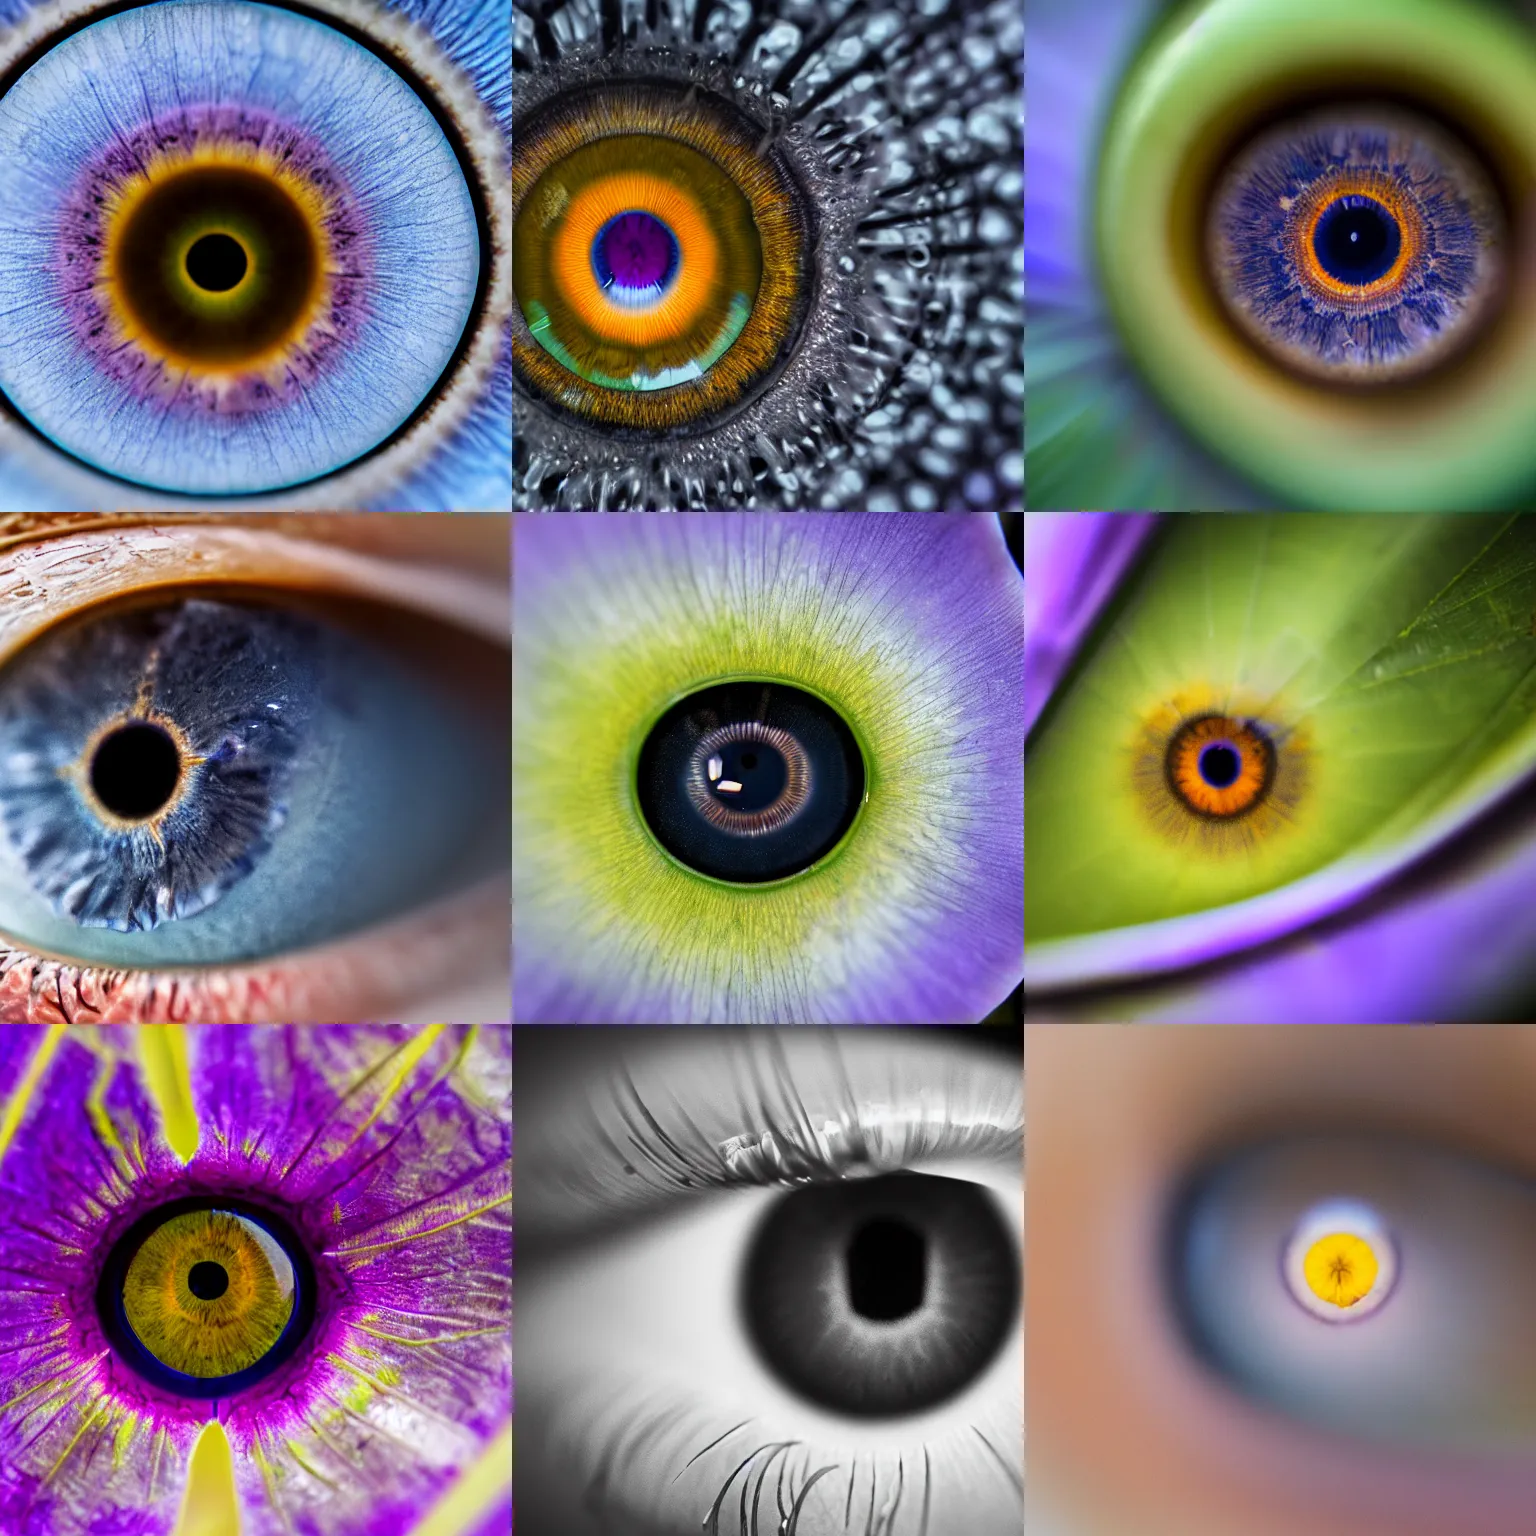 Prompt: human eye with triangular iris macro photography